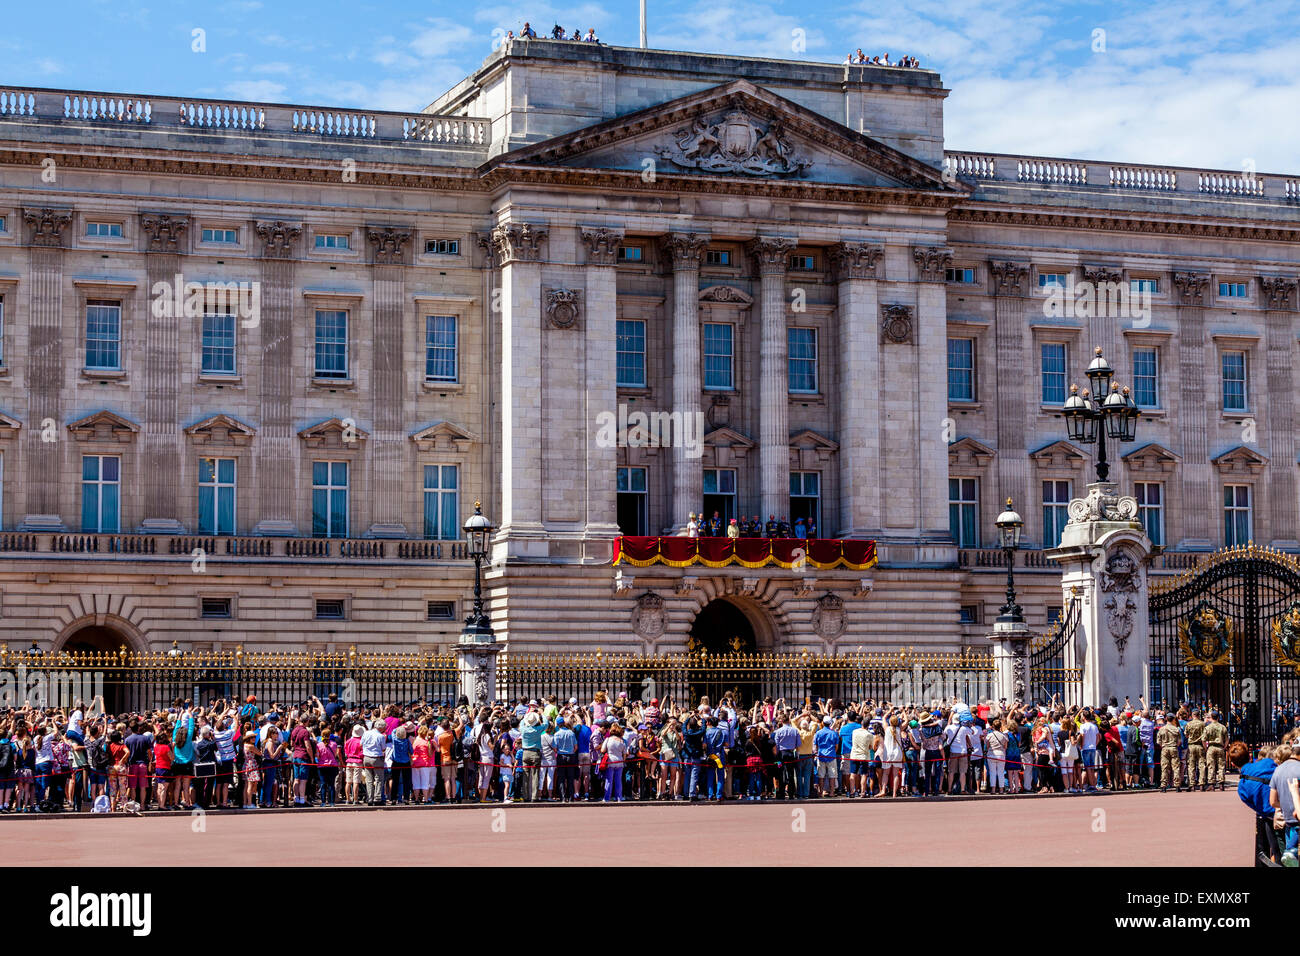 The British Royal Family On The Balcony Of Buckingham Palace, London, England Stock Photo